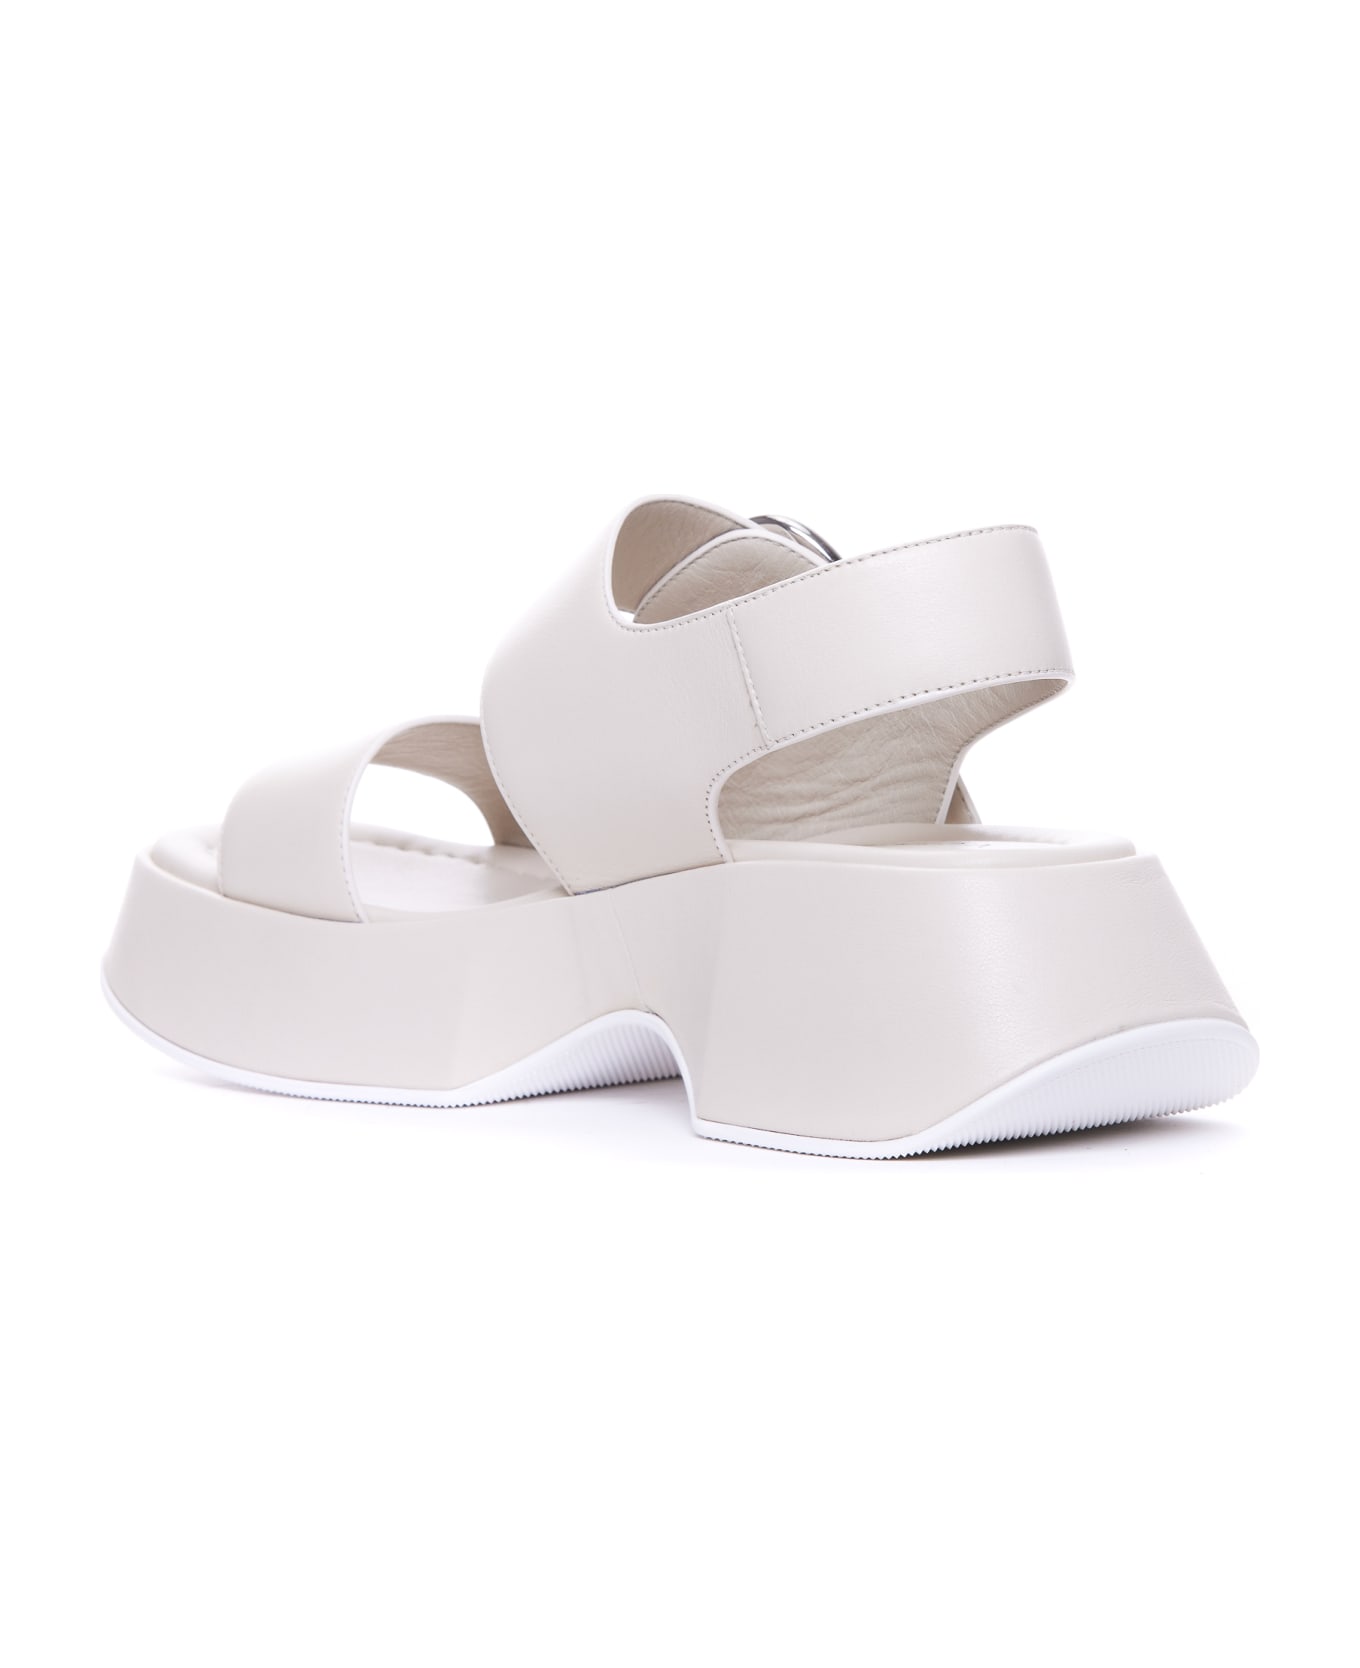 Vic Matié Travel Sandals - White サンダル